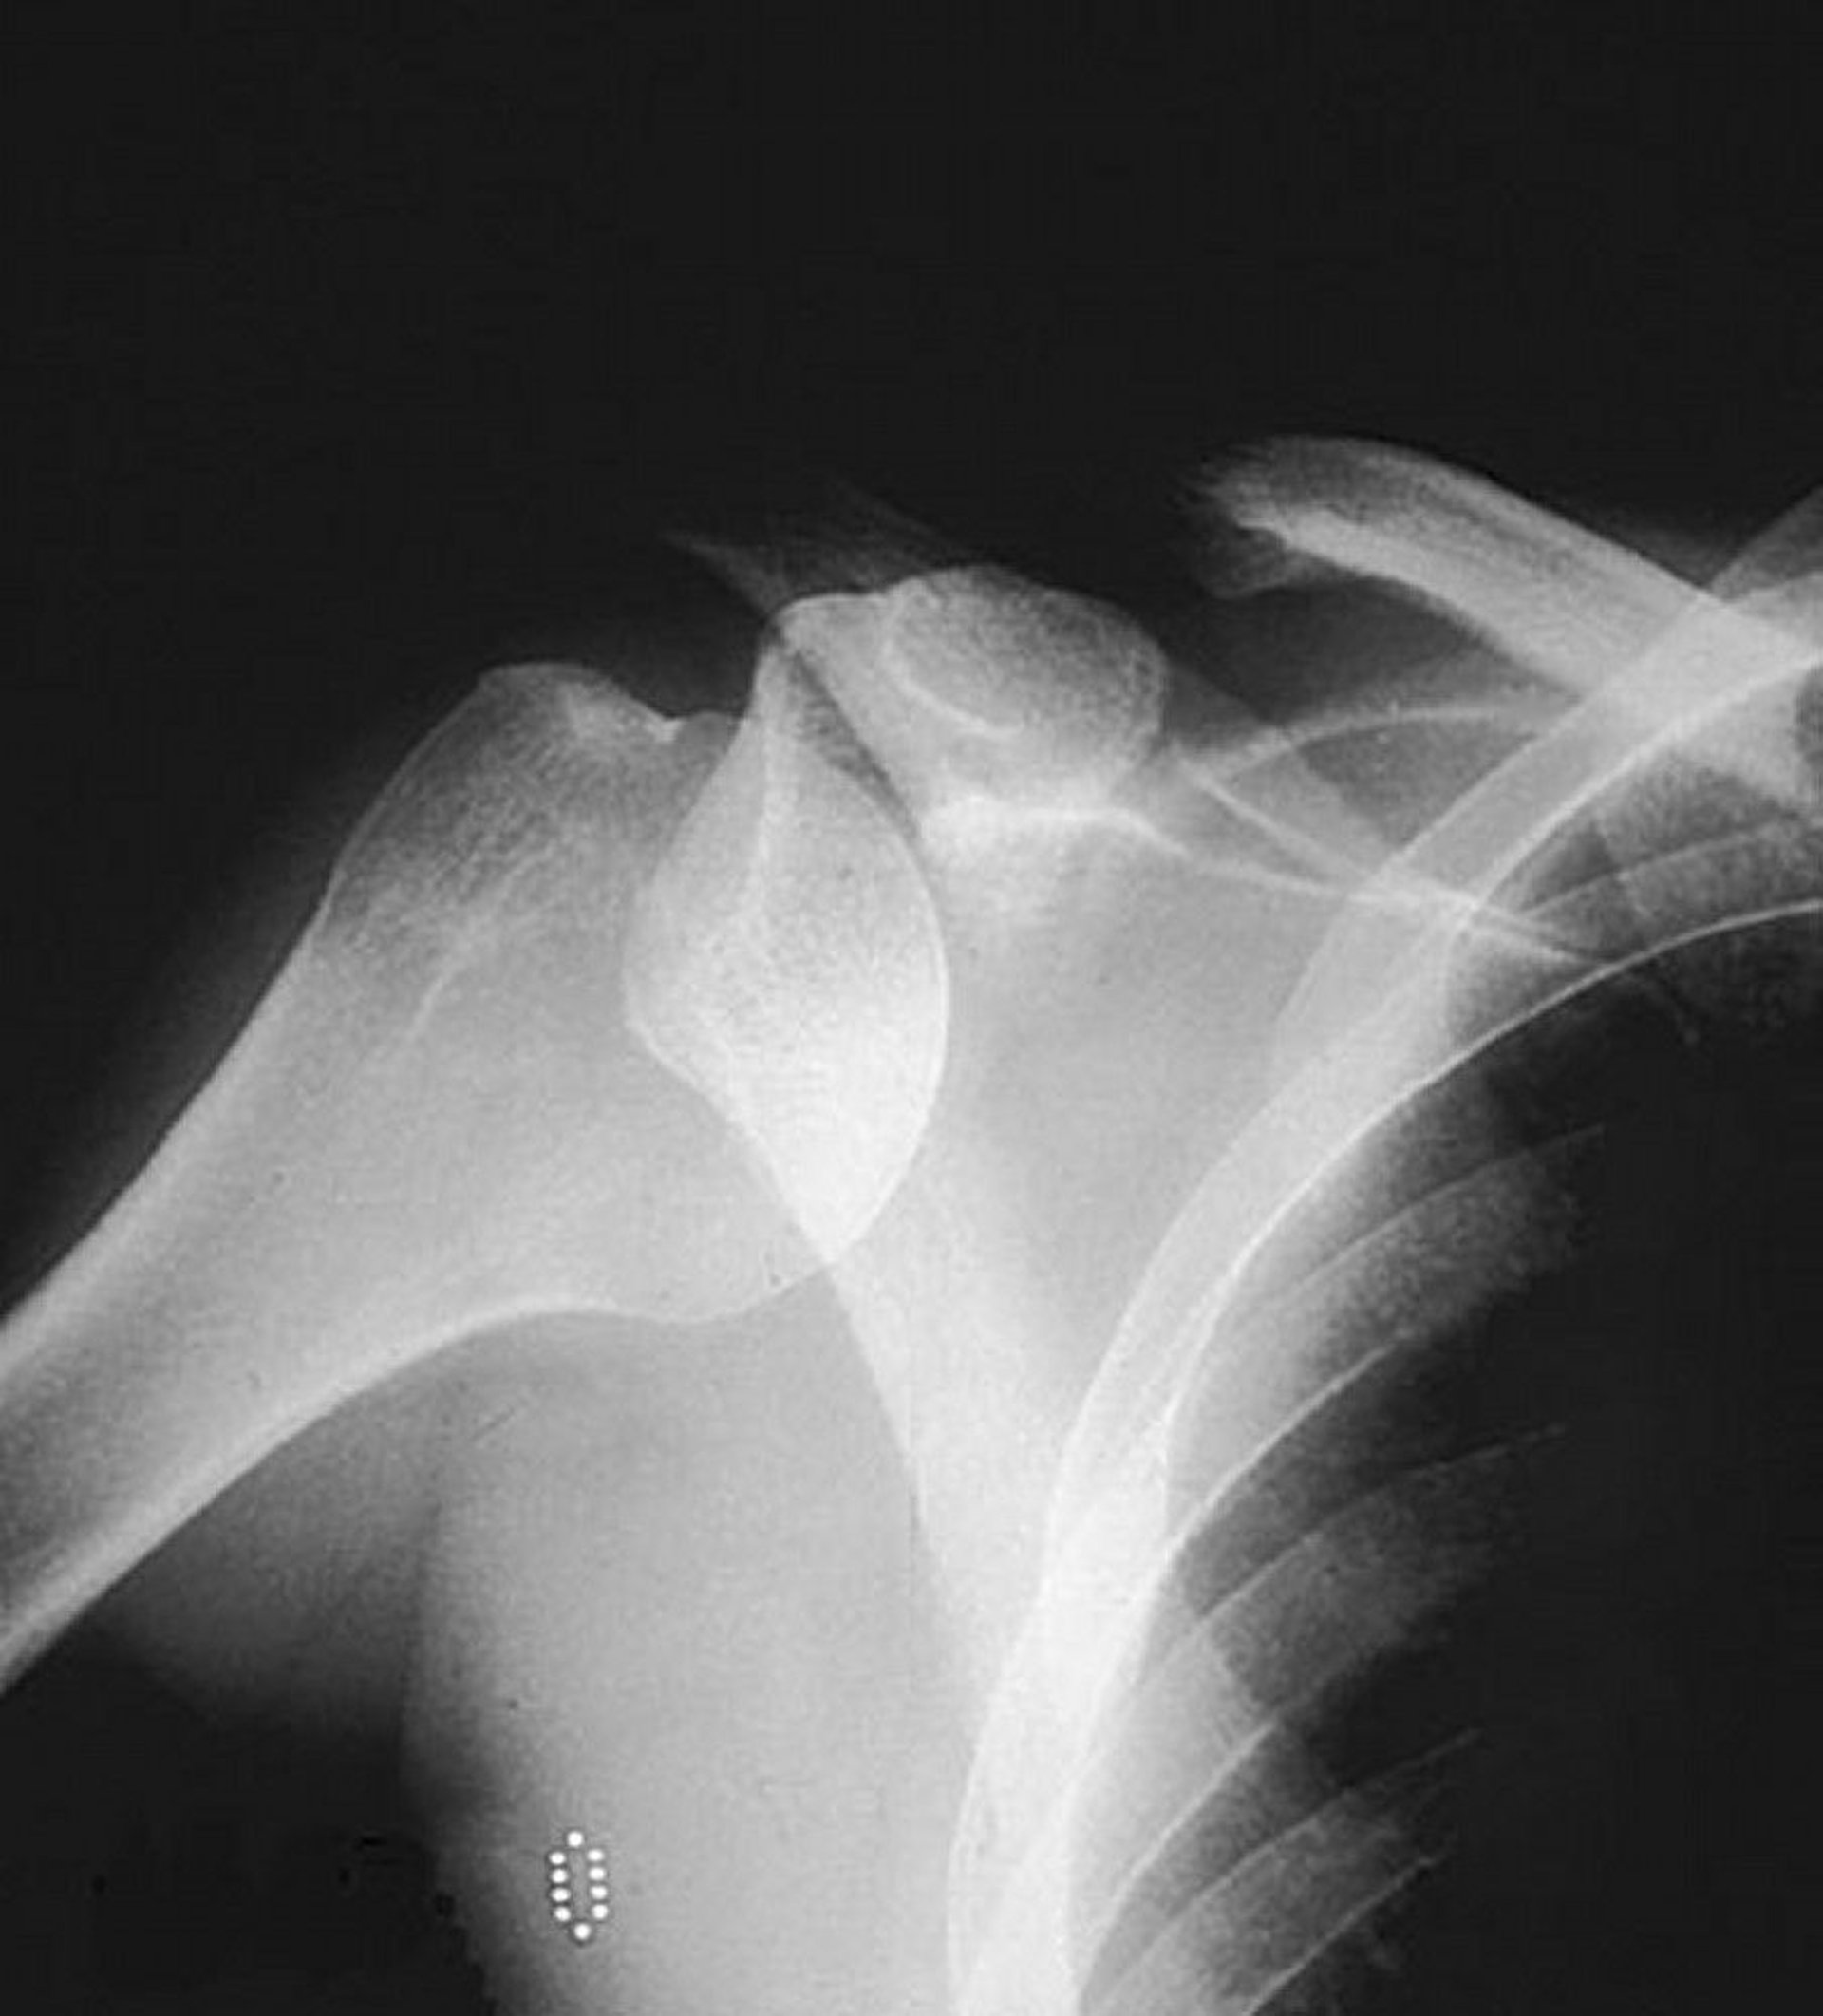 Anterior Glenohumeral (Shoulder) Dislocation